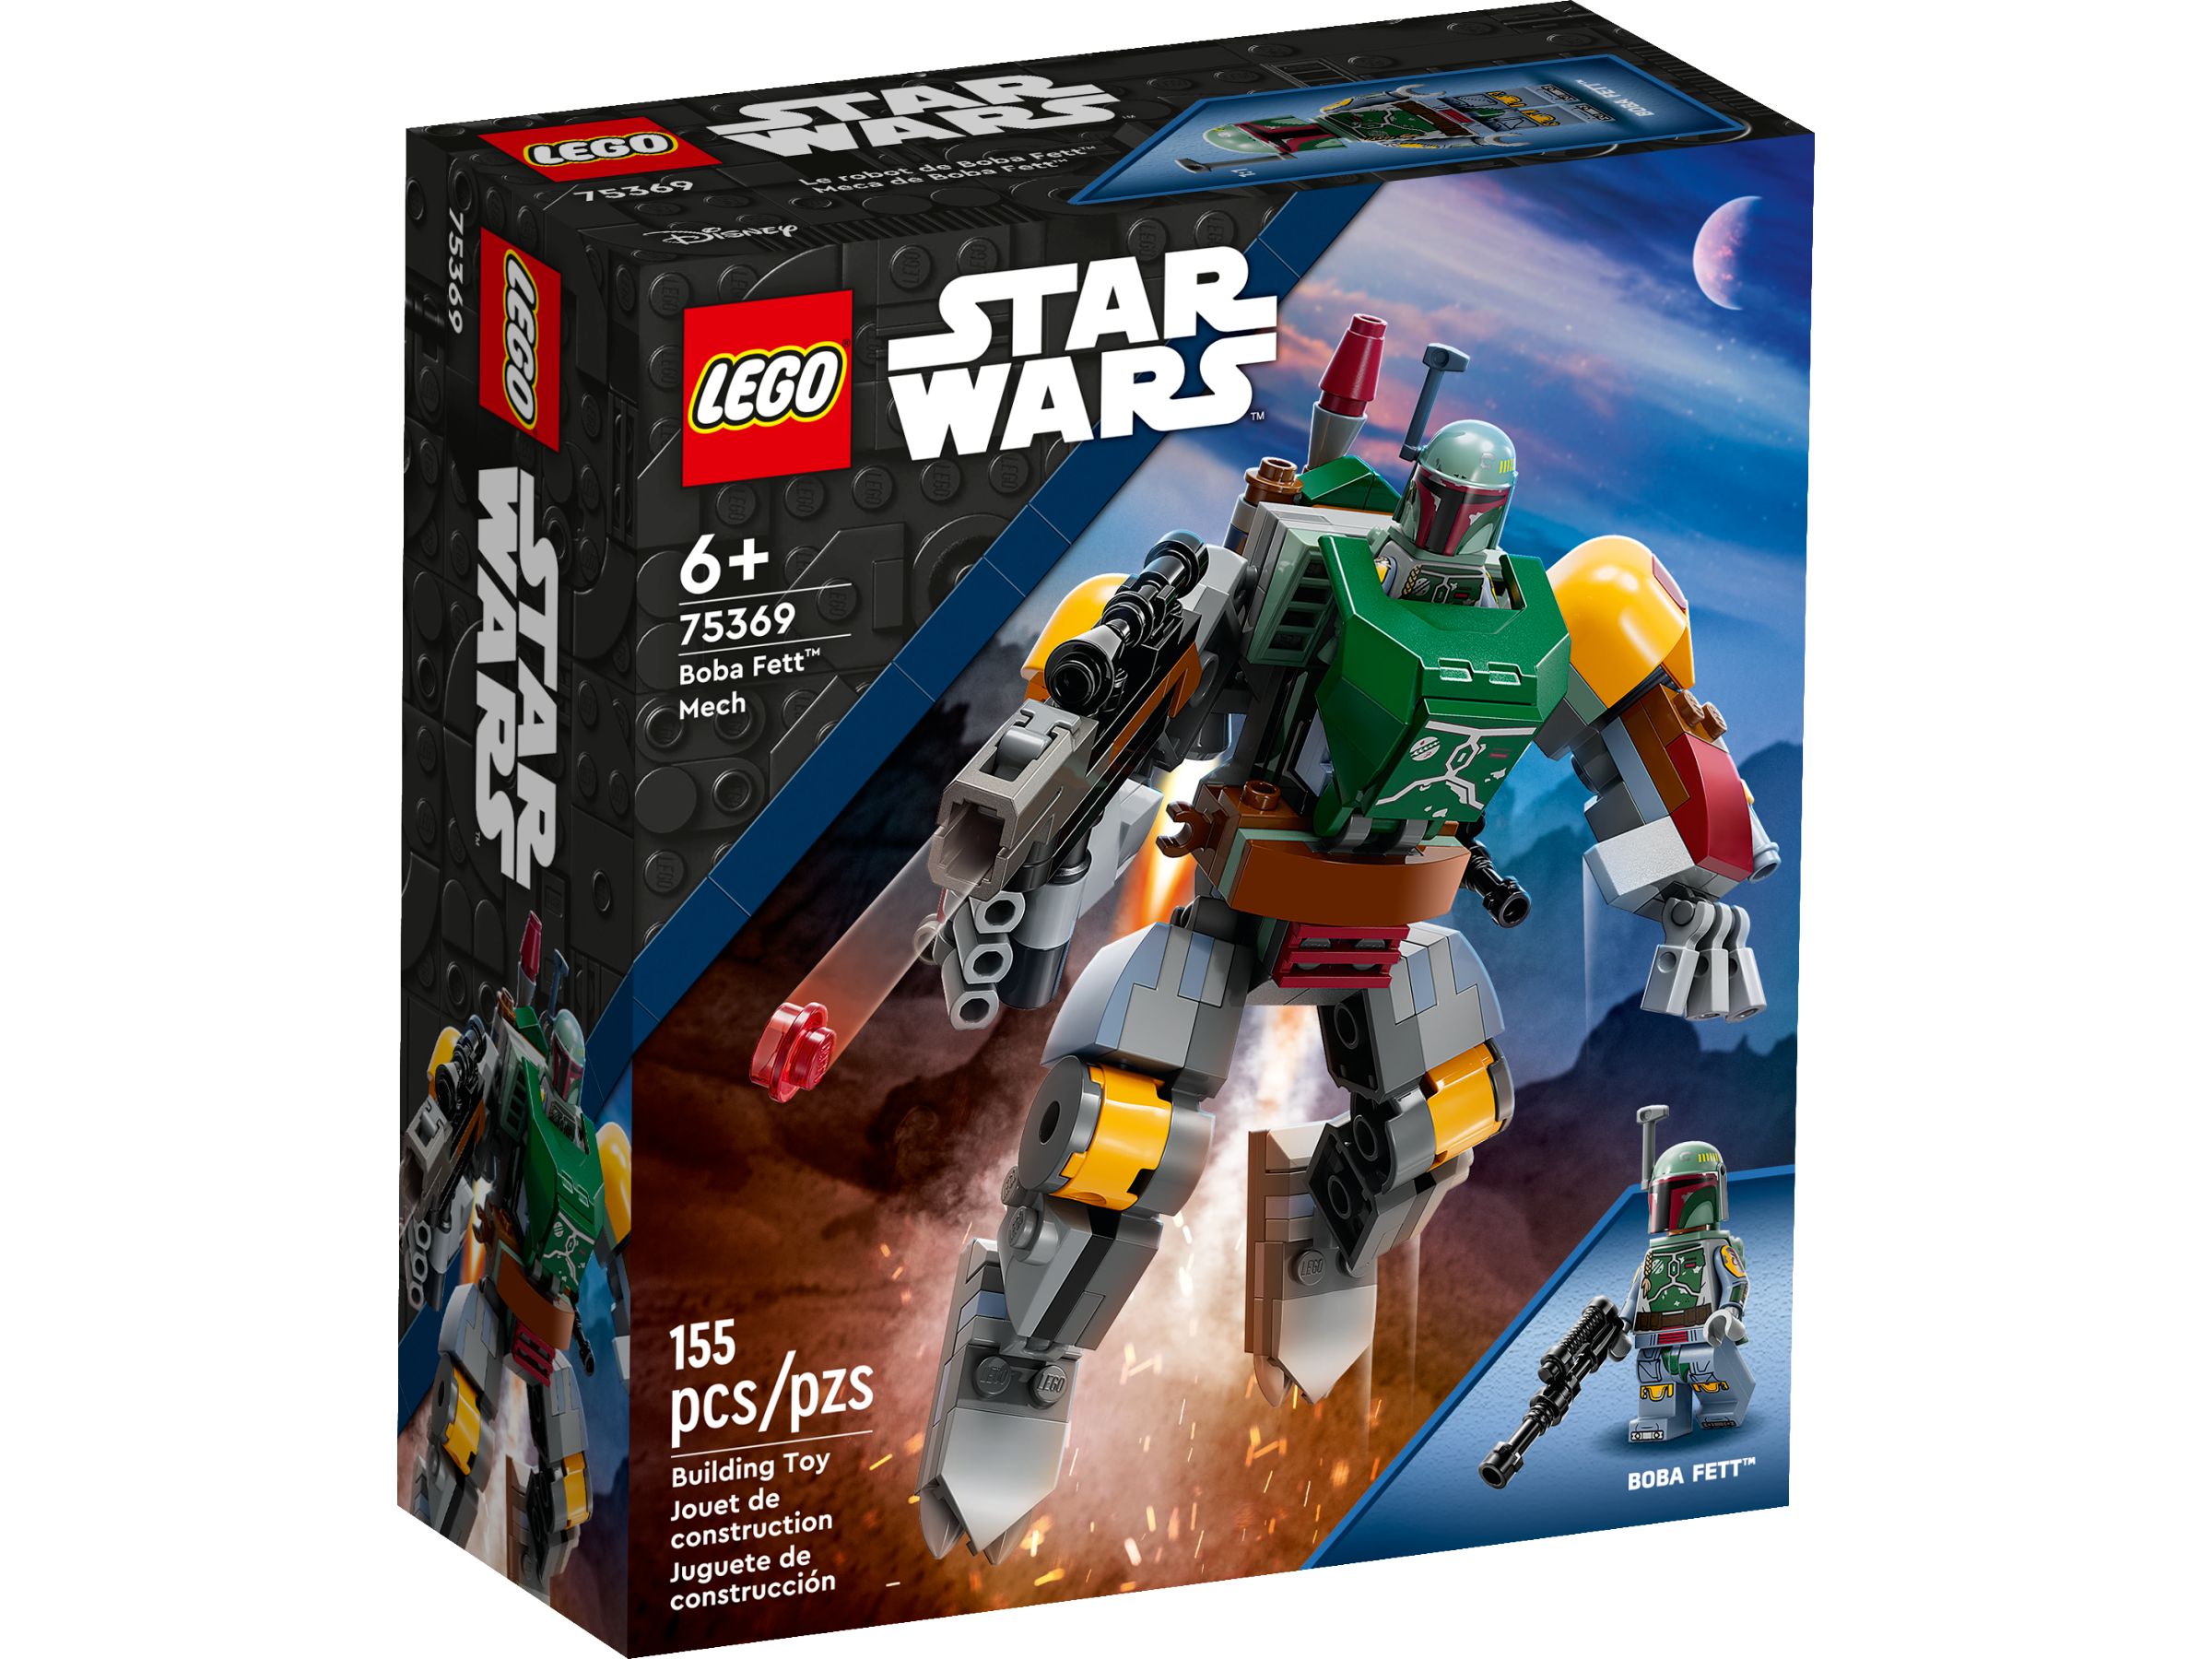 LEGO Star Wars 75369 Boba Fett™ Mech LEGO_75369_alt1.jpg